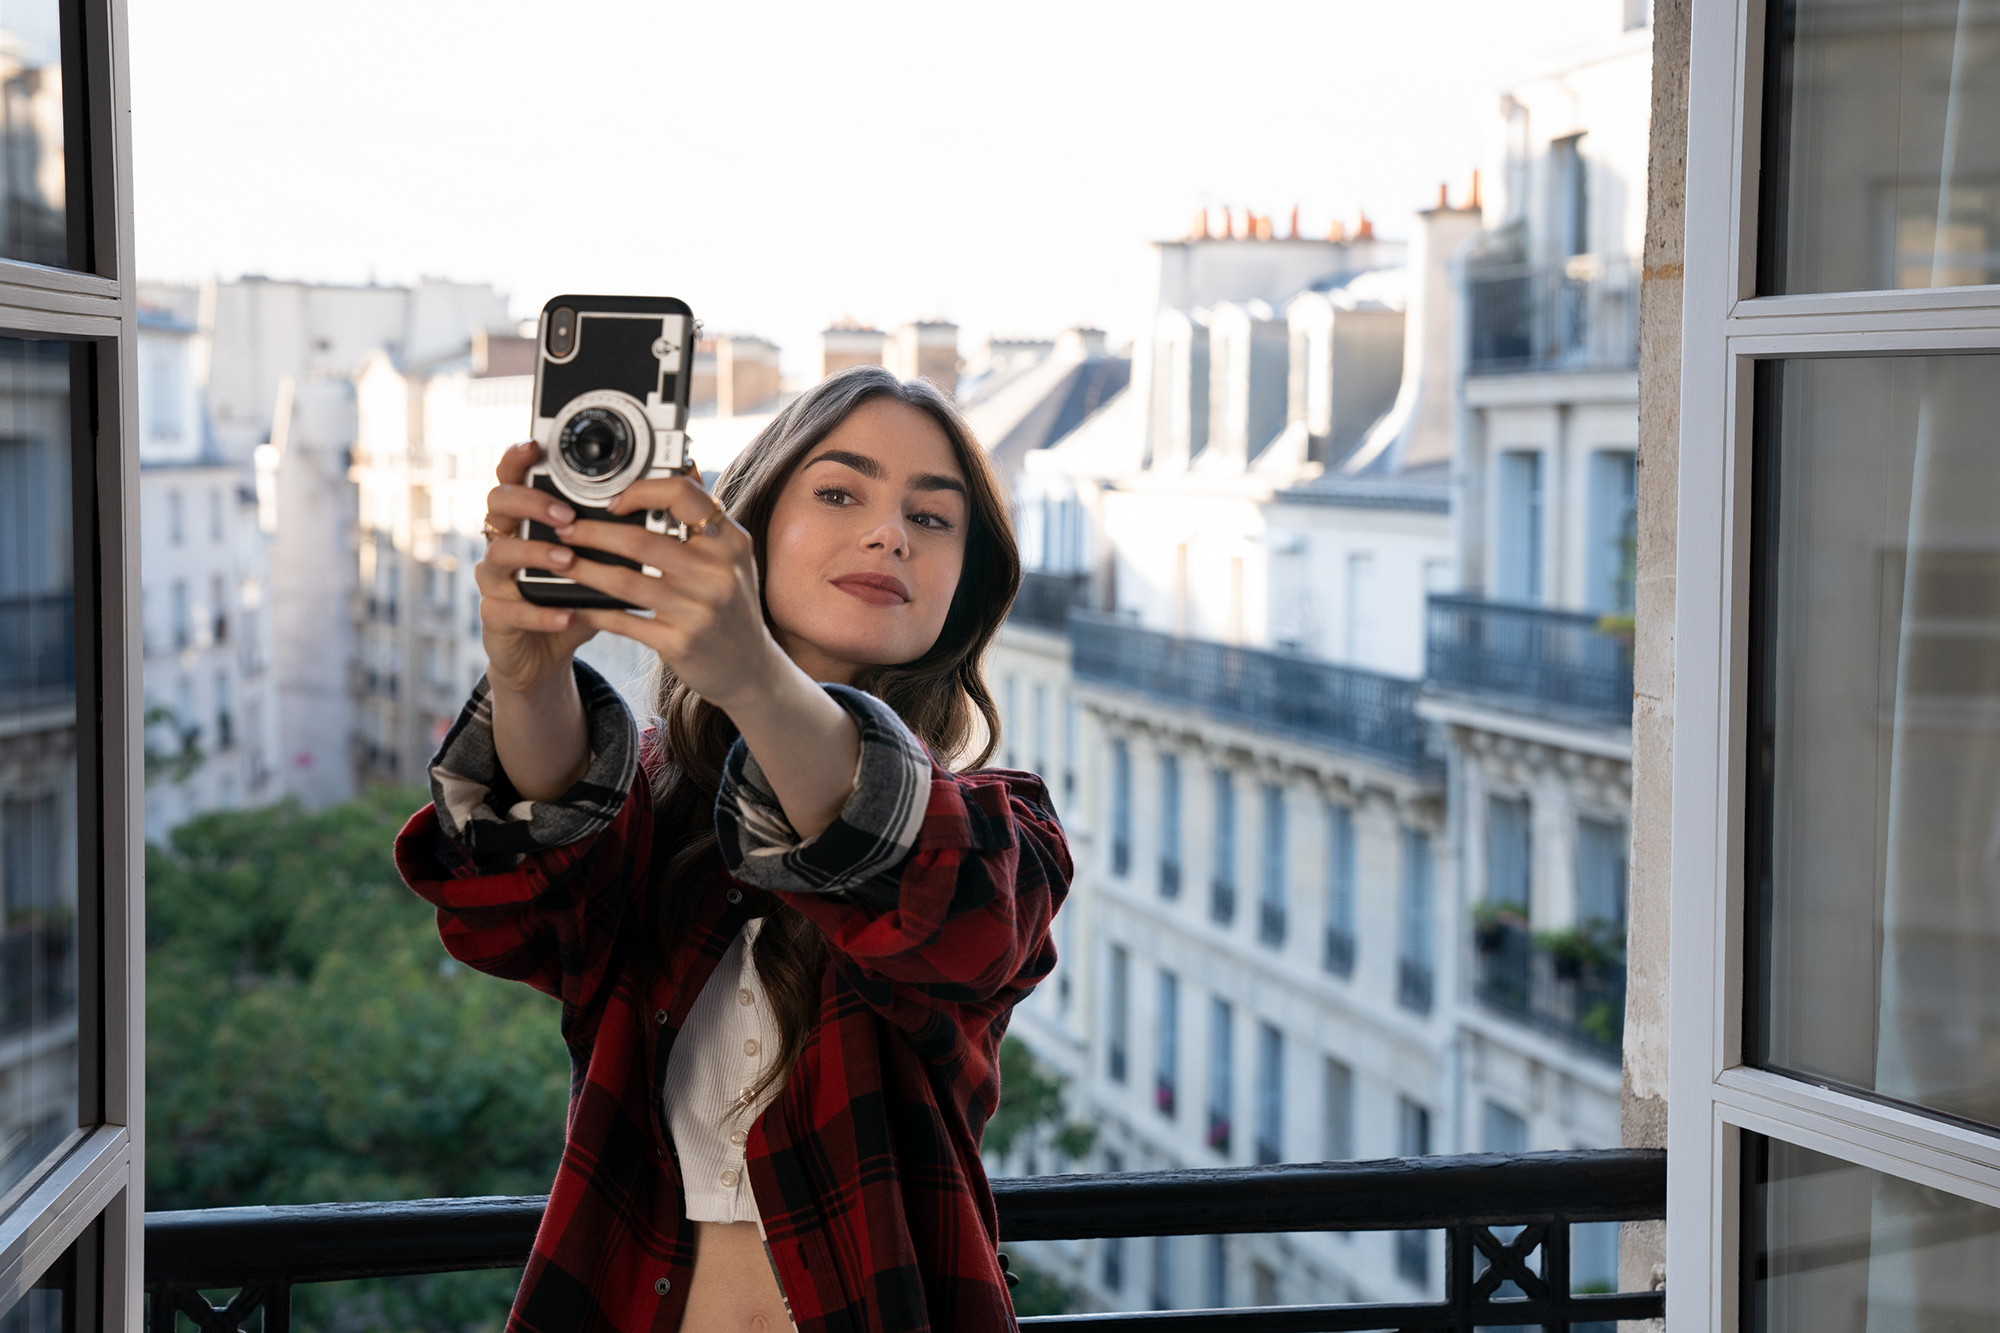 Emily in Paris Season 3: Release Date, Trailer and Photos - Netflix Tudum